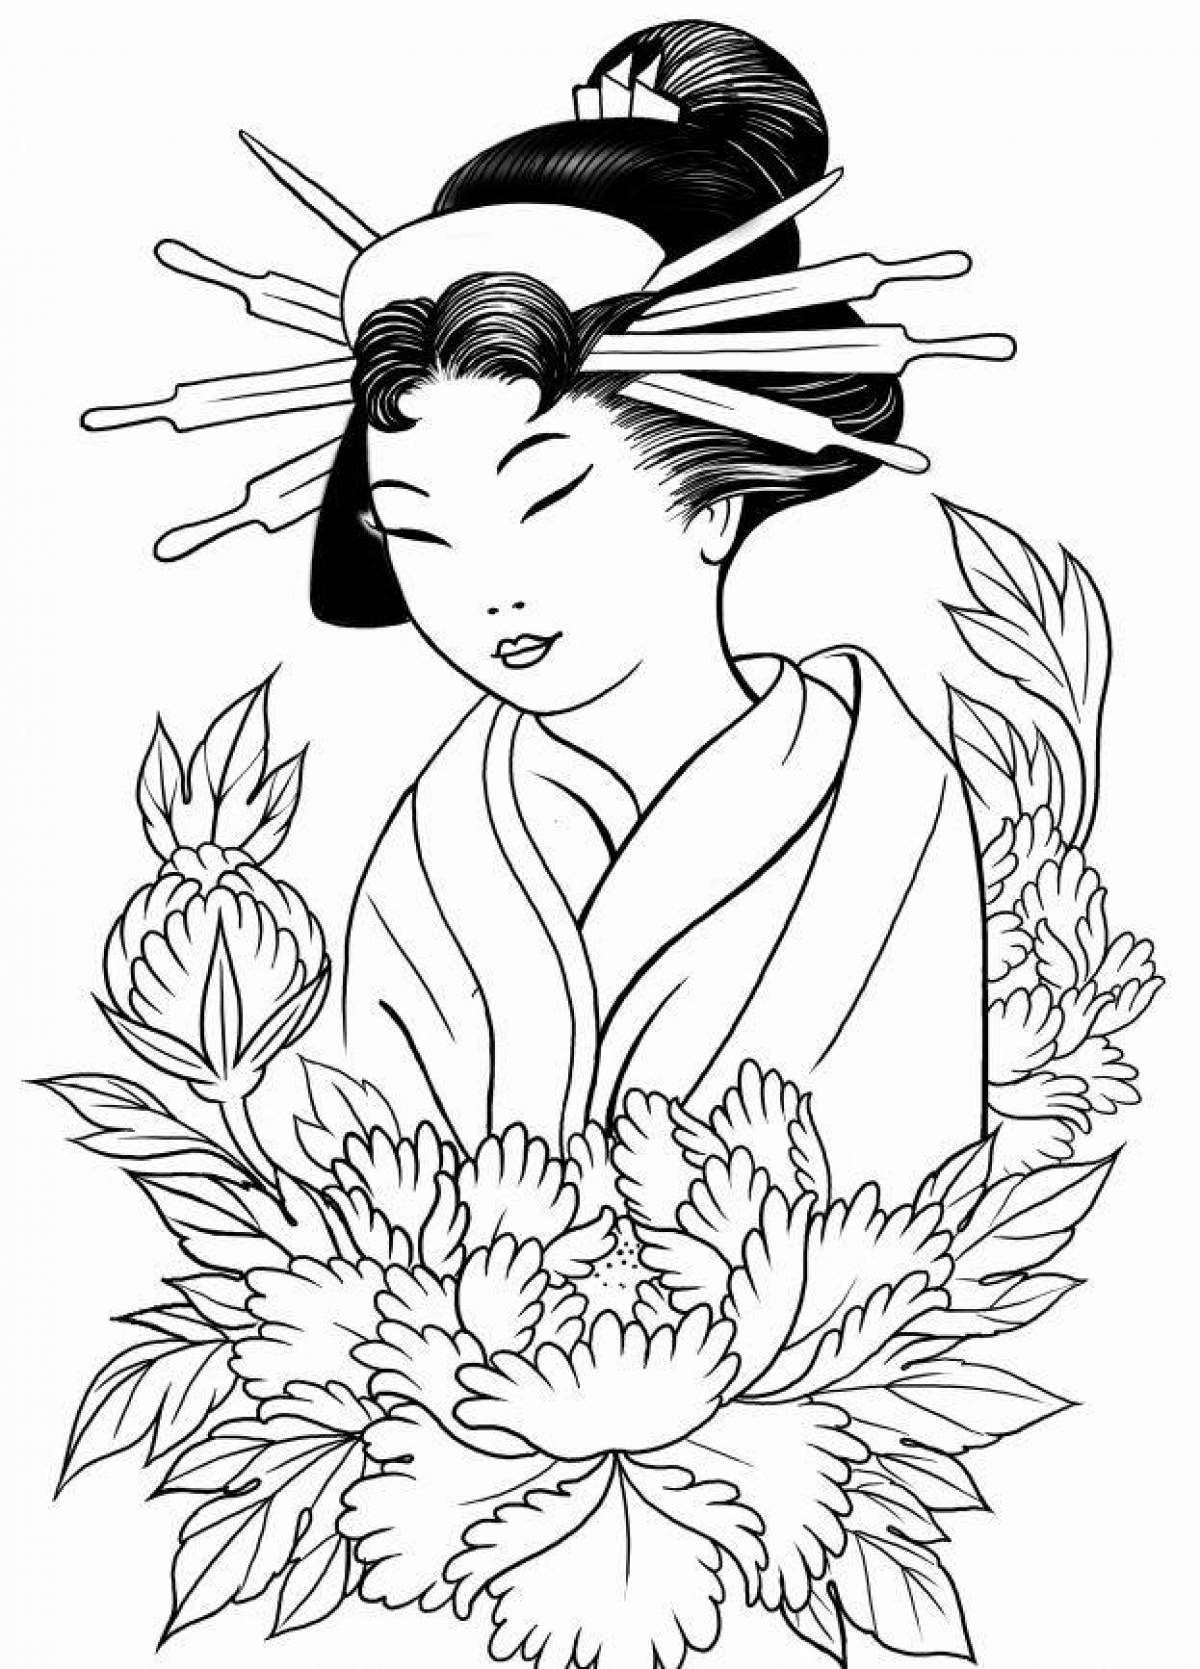 Coloring page joyful geisha